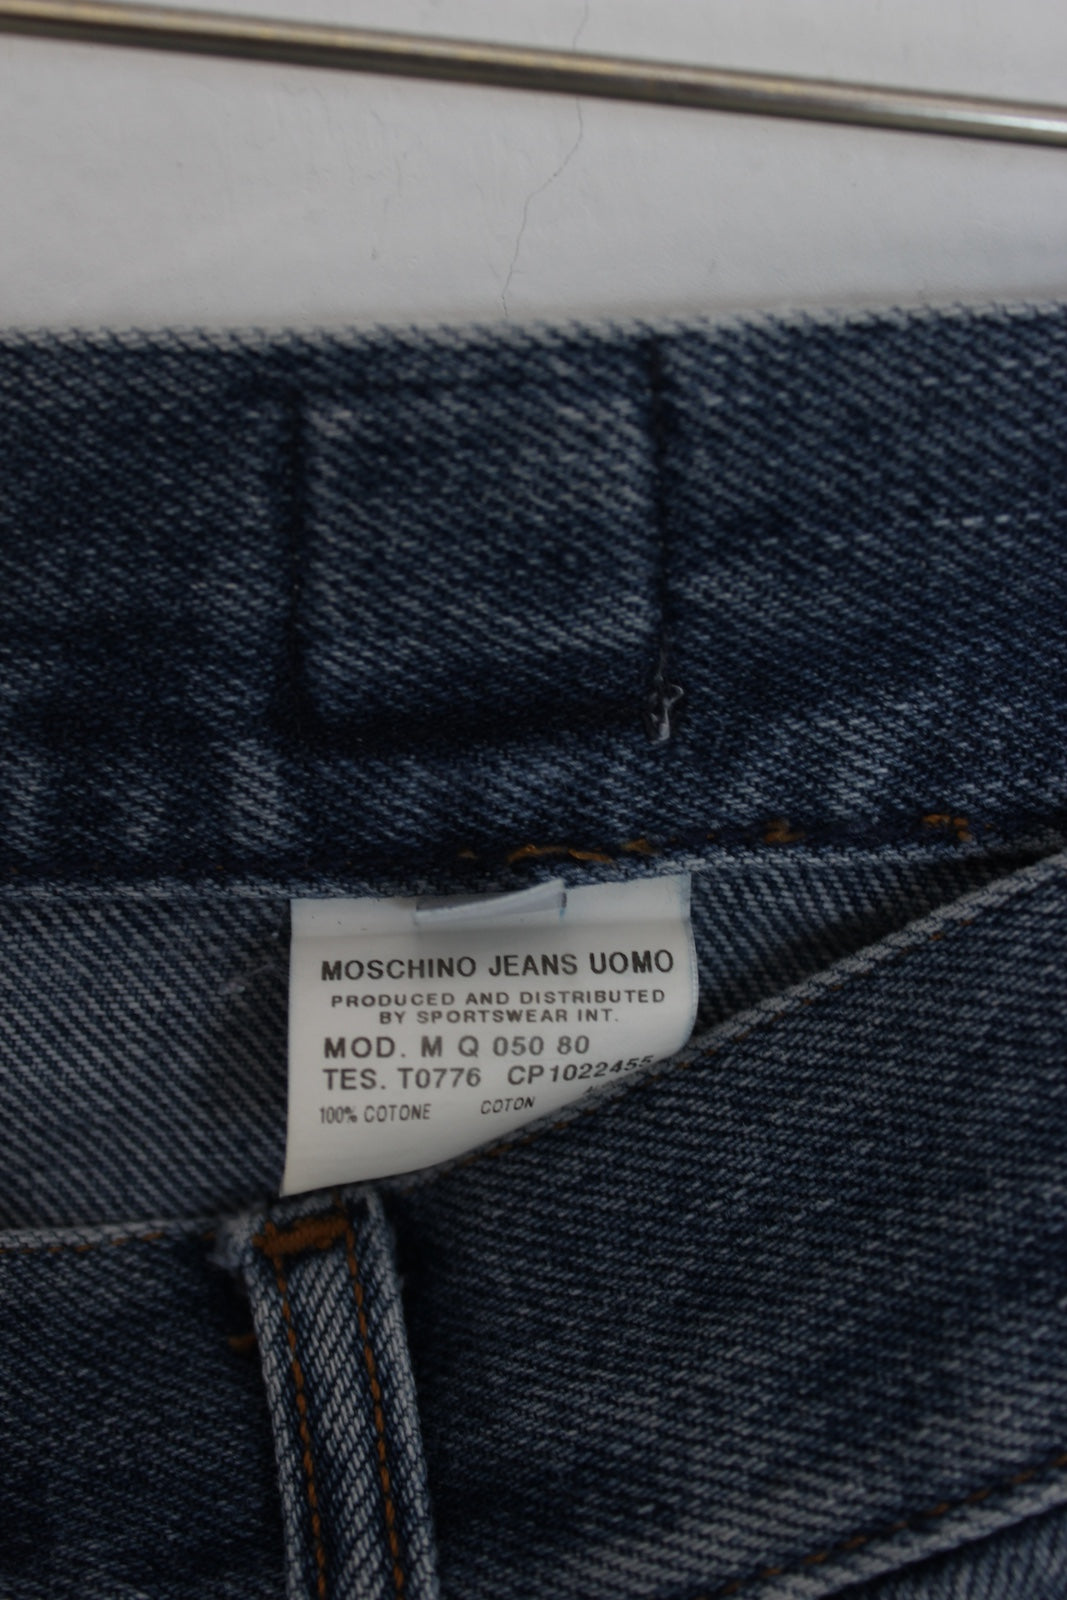 Moschino Jeans Patchwork Blu Anni 2000